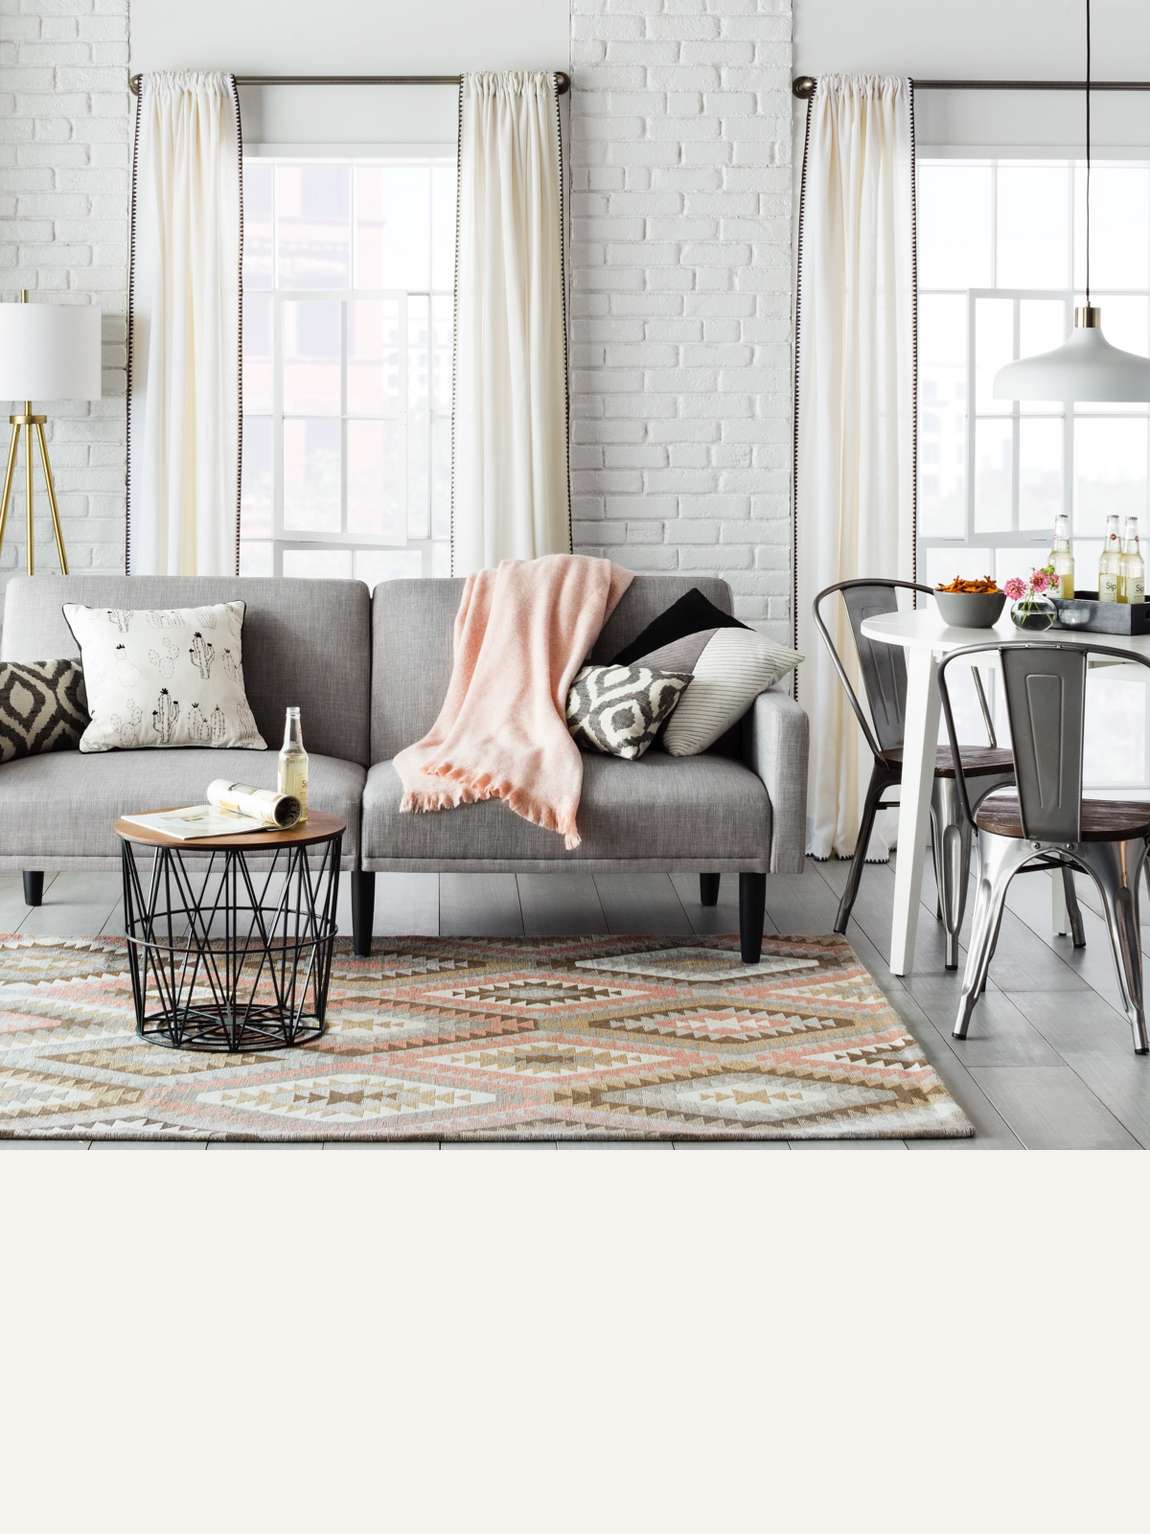 Light Grey Leather Couch Living Room Ideas - Joeryo ideas